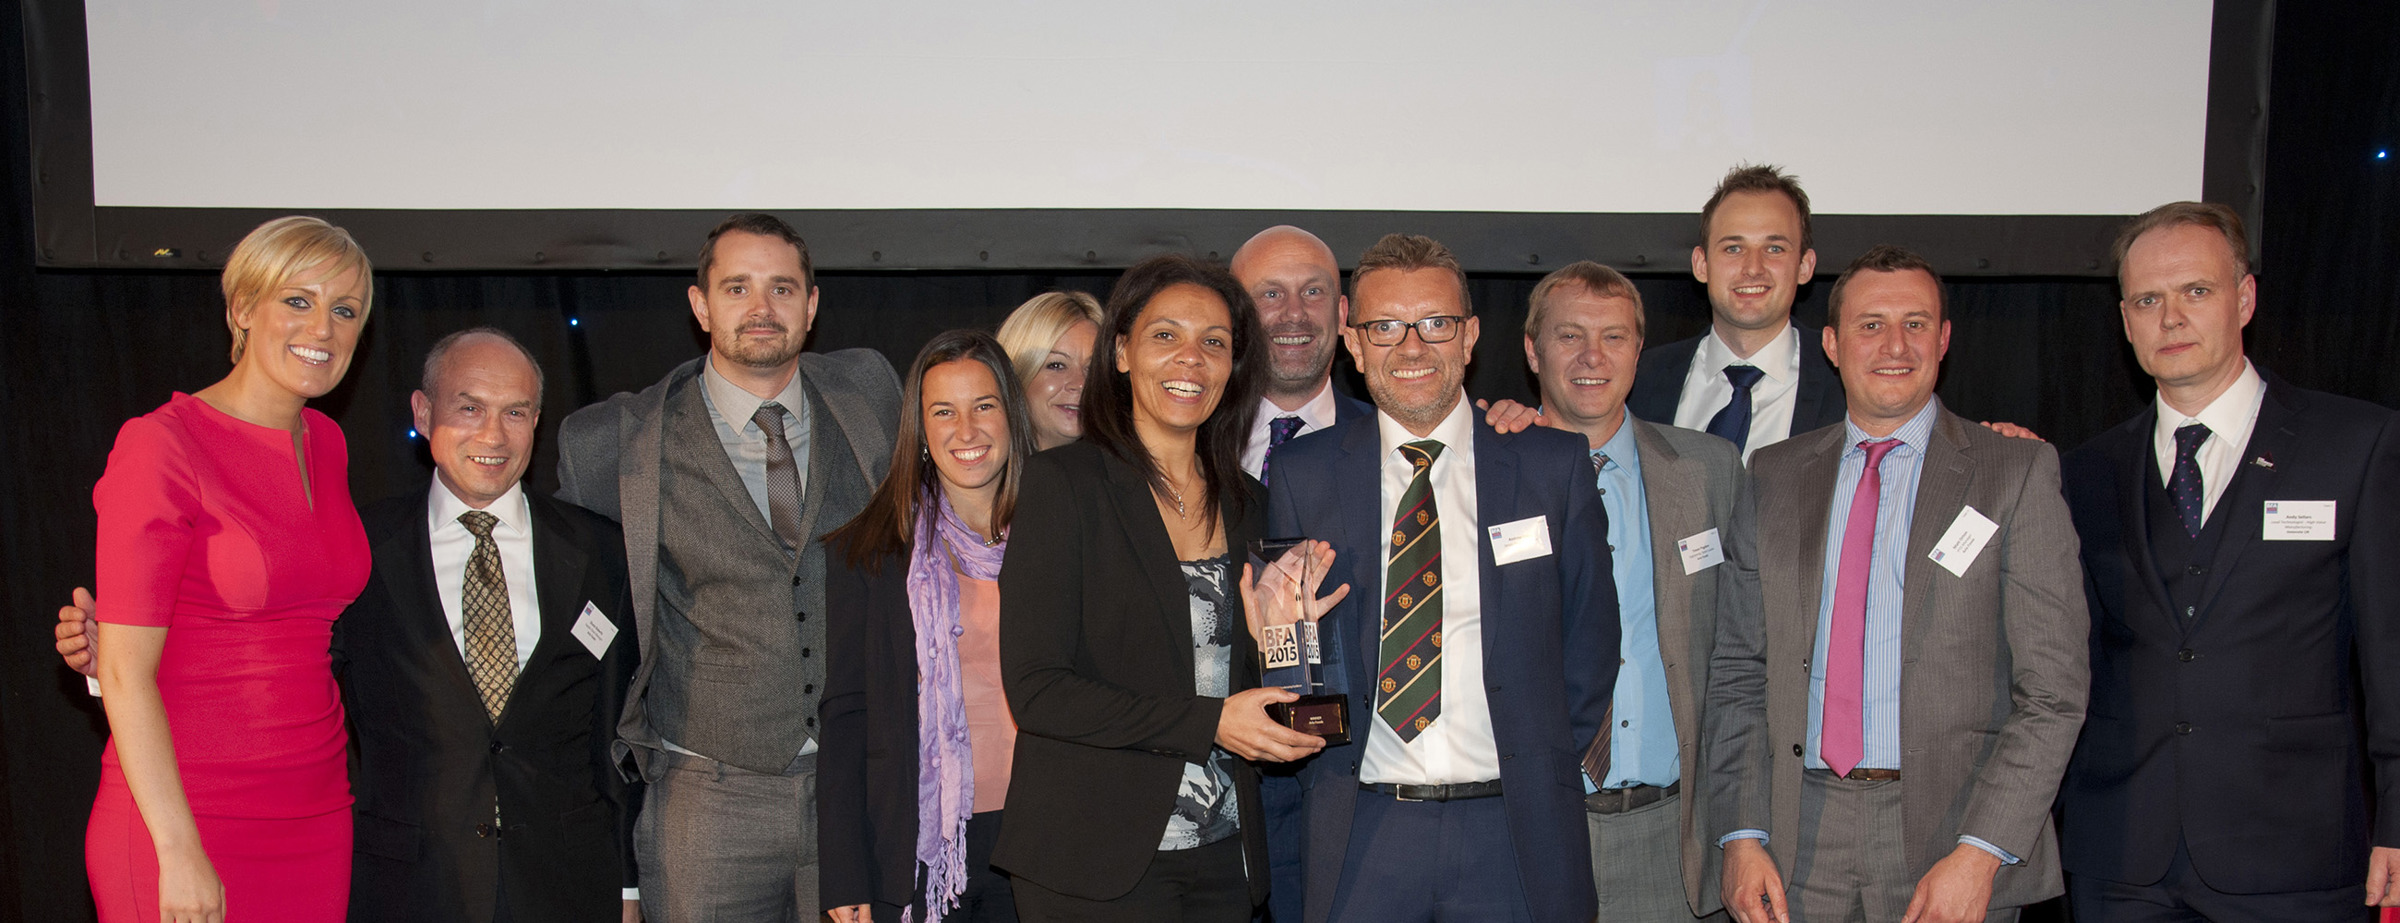 Arla Aylesbury celebrating their Innovation award at the Best Factory Awards 2015